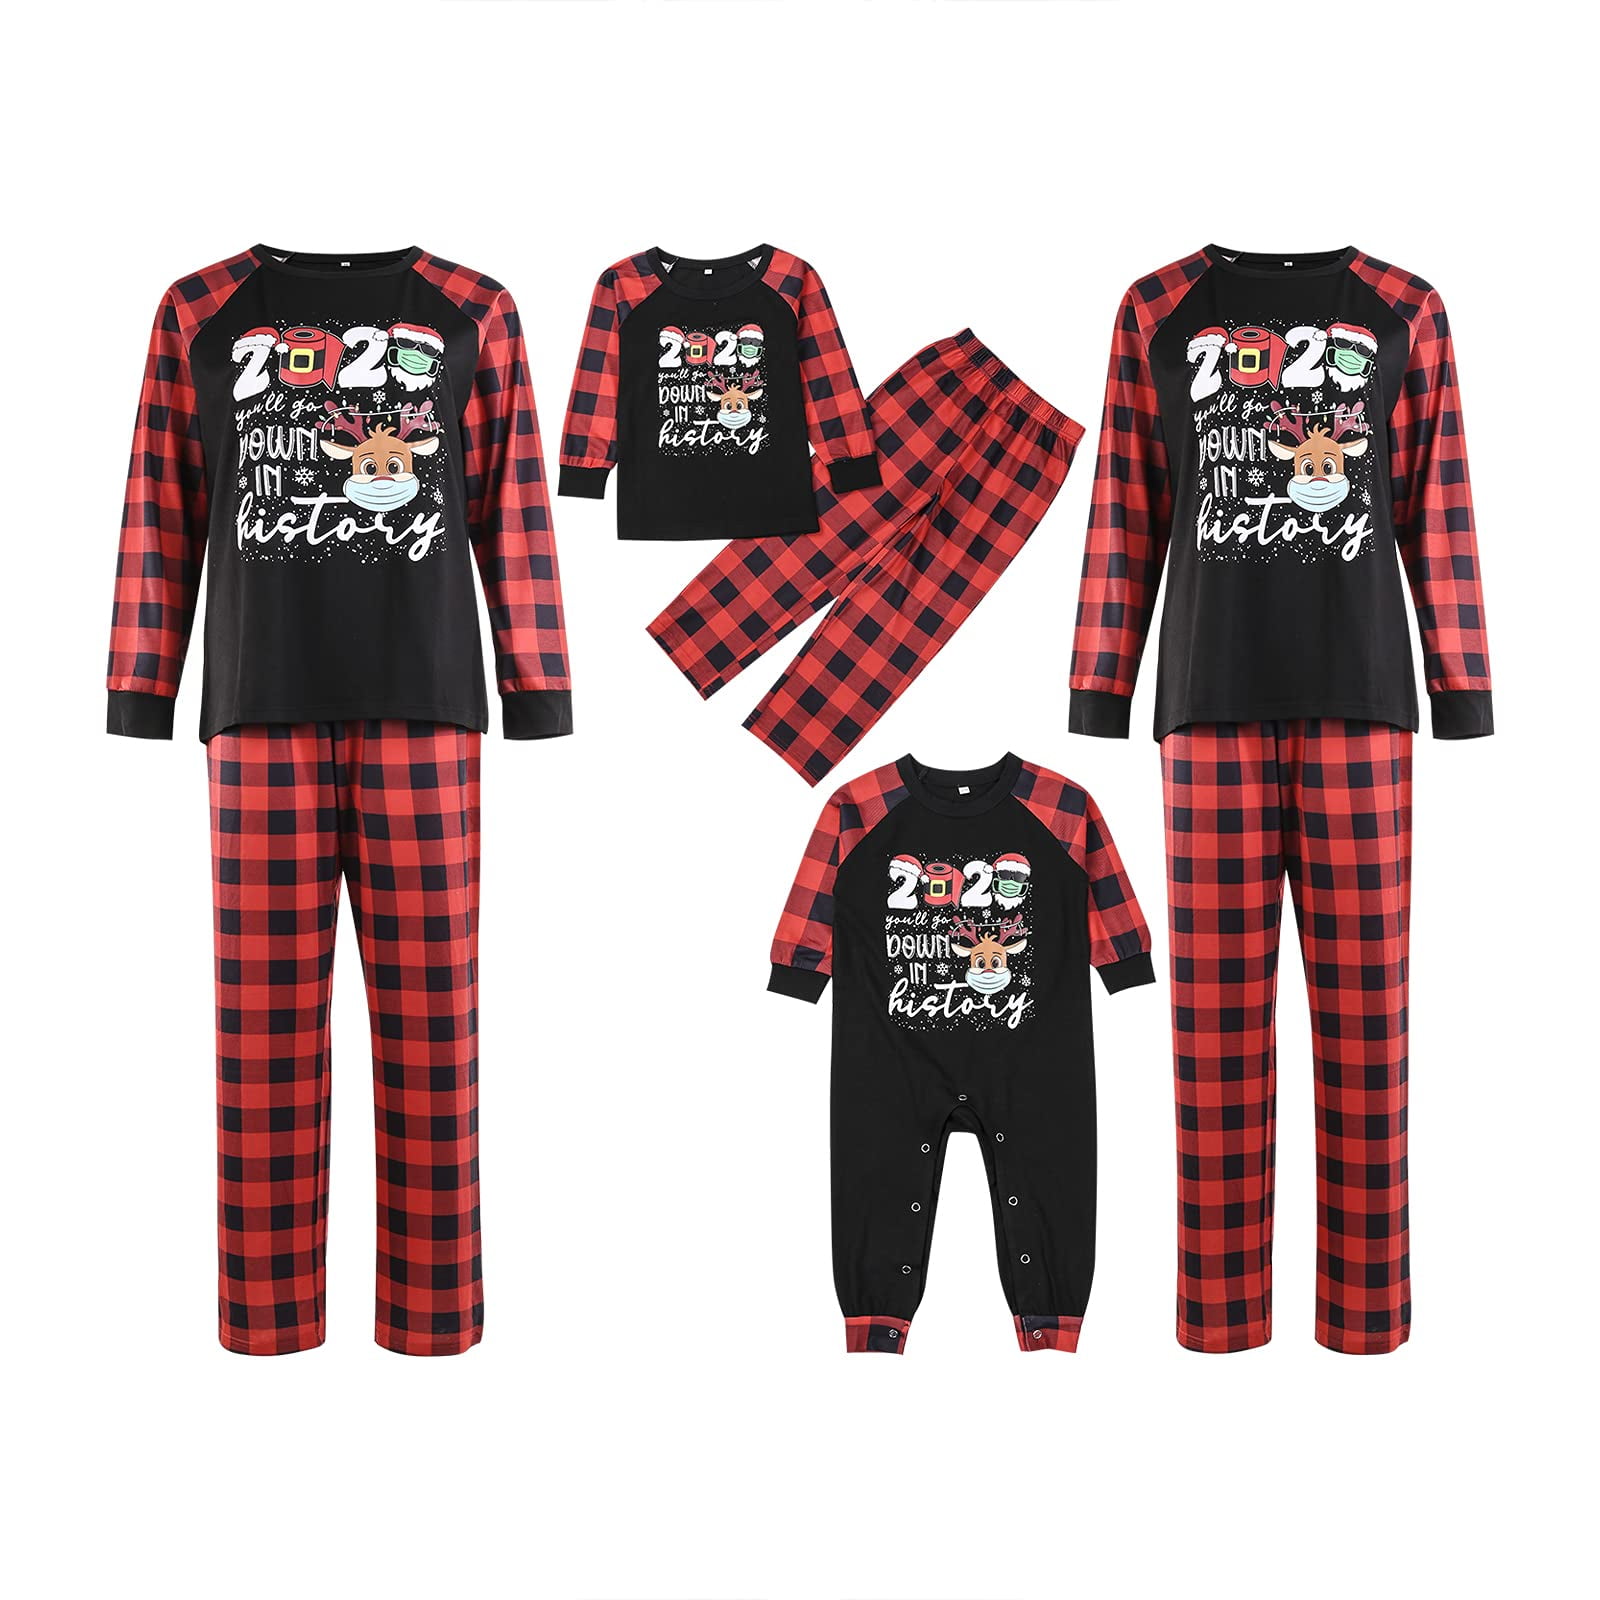 IFFEI Matching Family Christmas Pajamas Set Splice Plaid Raglan Long-Sleeve Family Pj Outfits